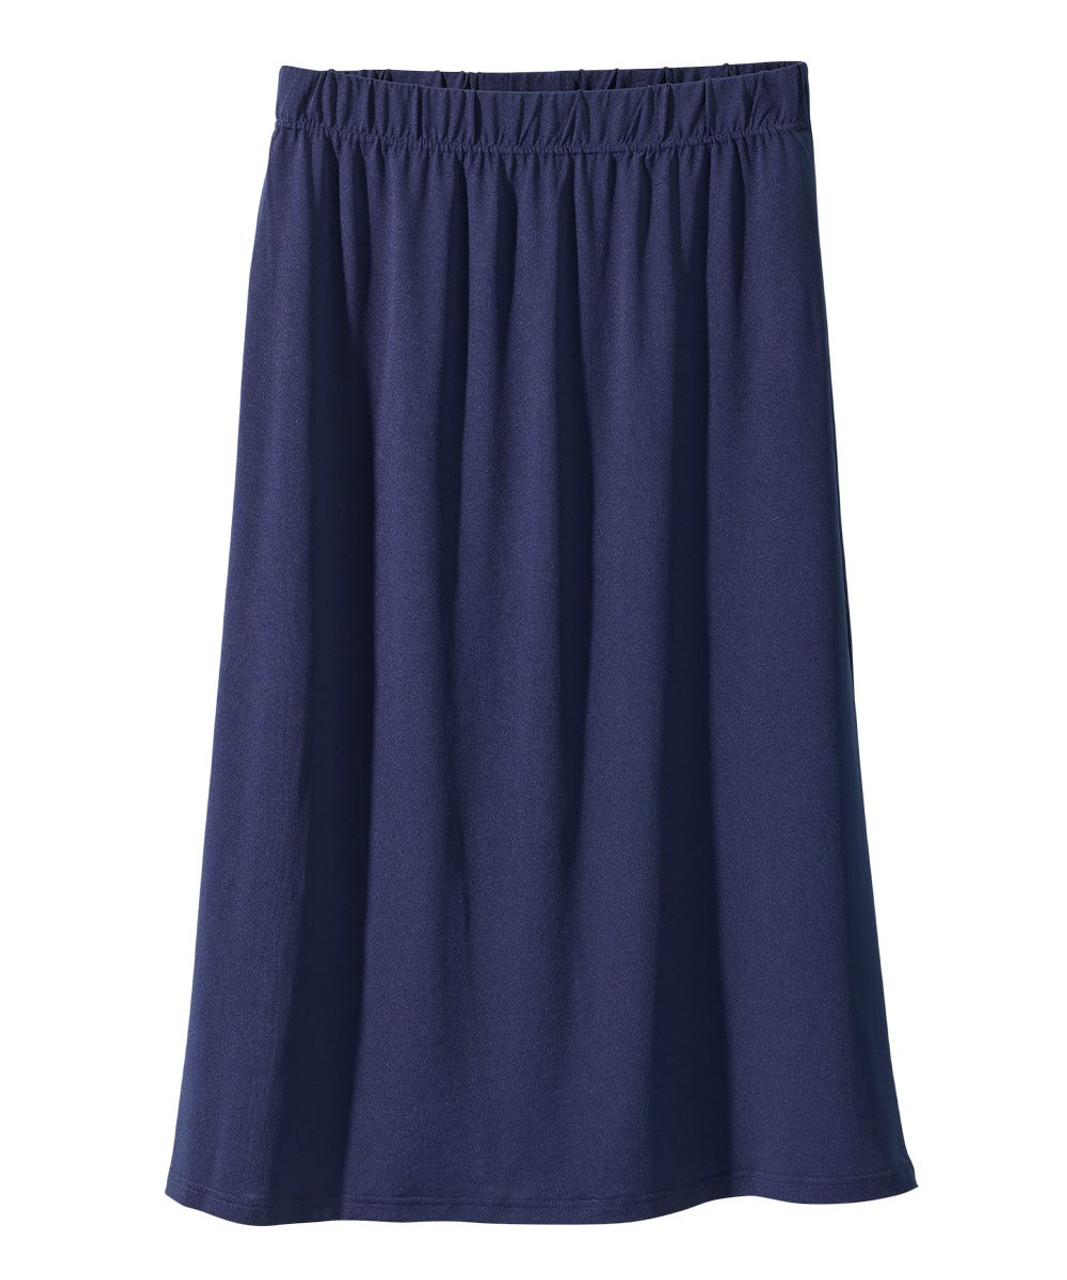 Silverts SV031 Senior Women's Pull-on Skirt Indigo, Size=L, SV031-SV773-L